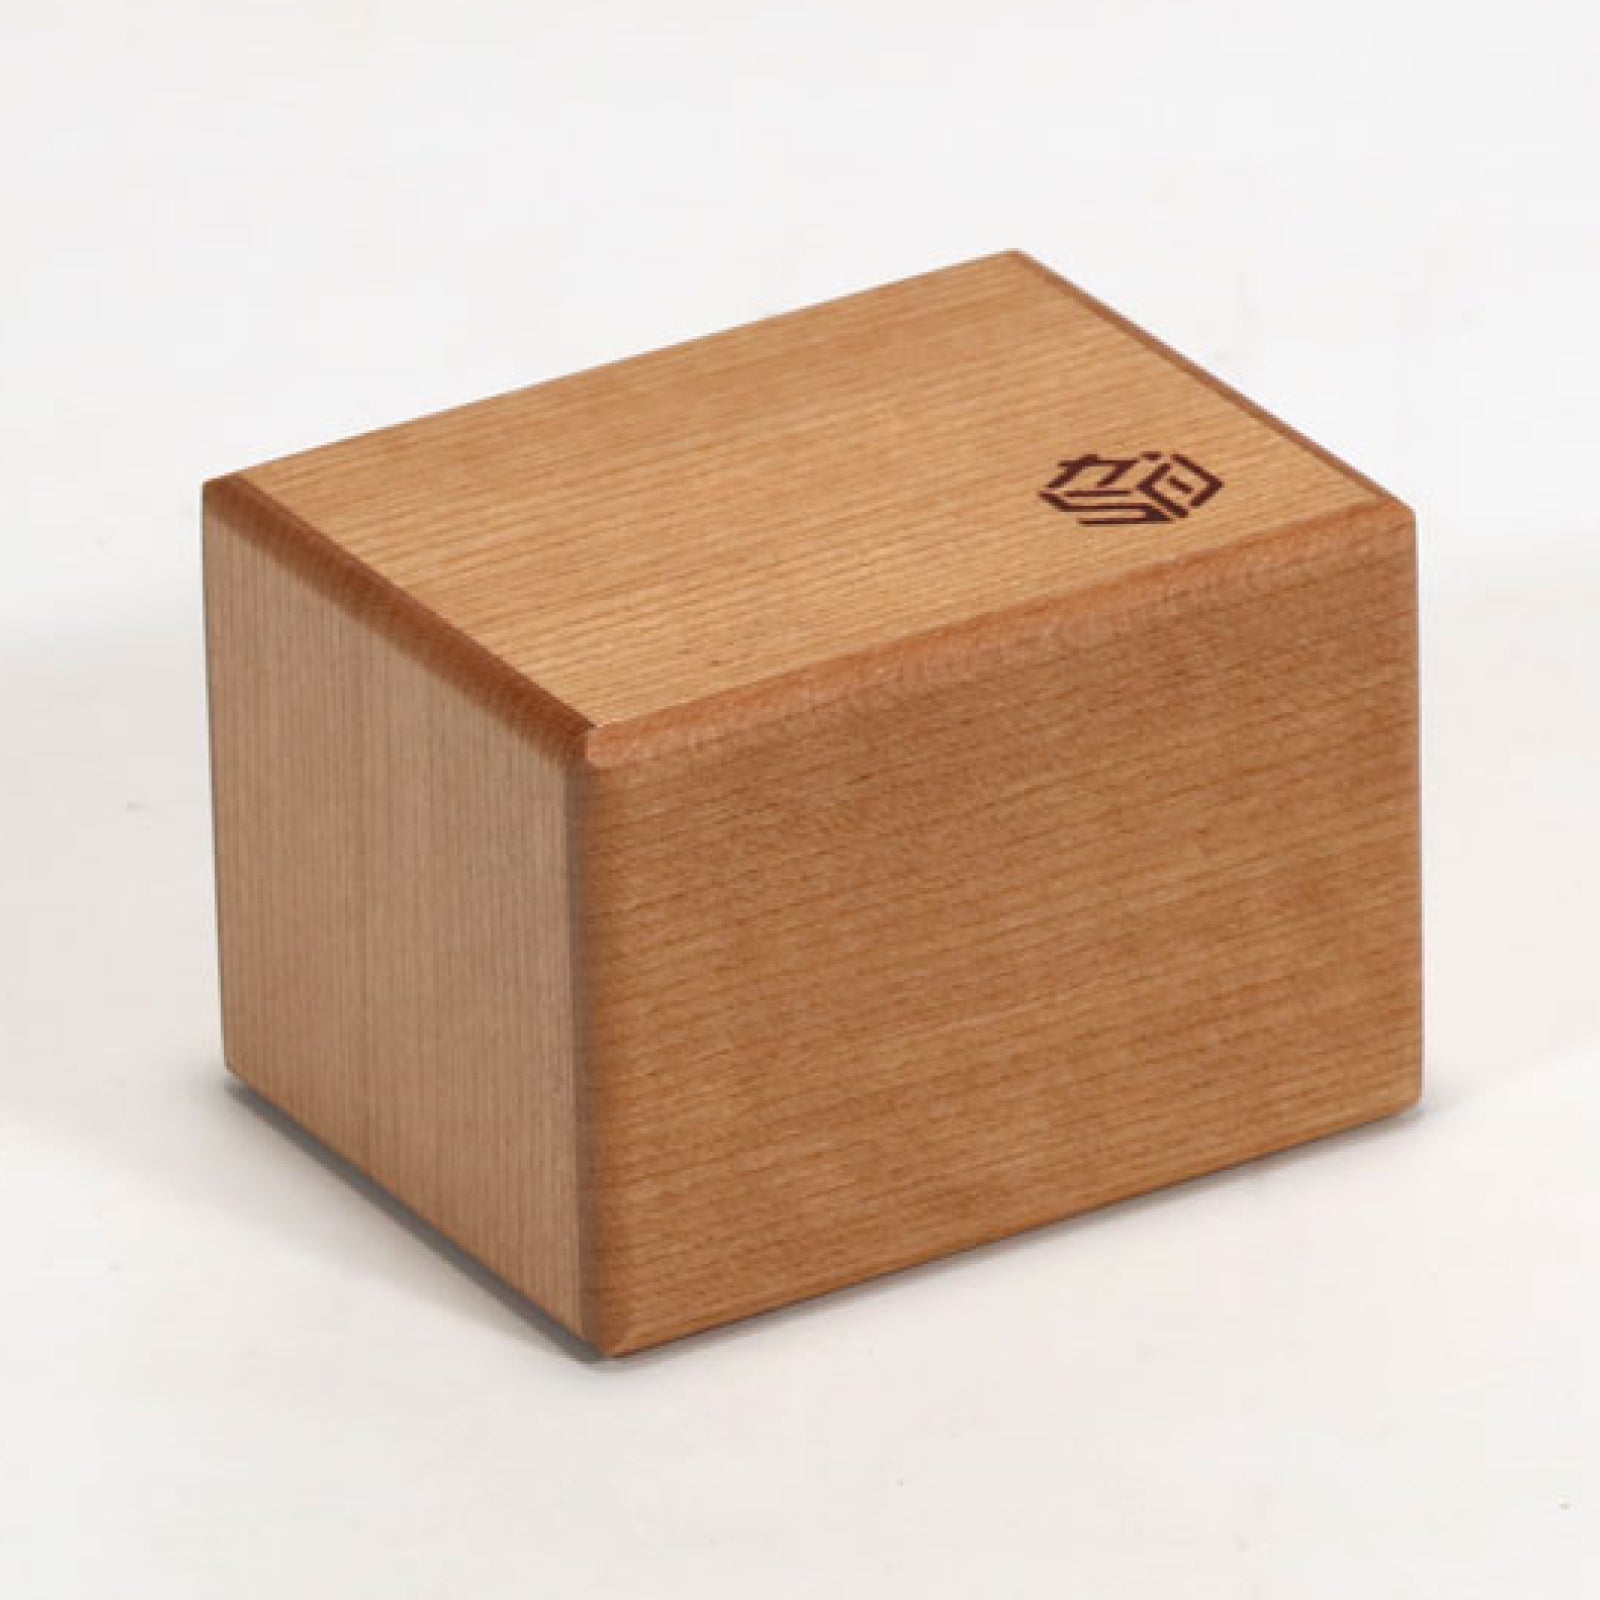 Karakuri Small Box #2 - Level 4 (Maybe??) - Karakuri Creation Group